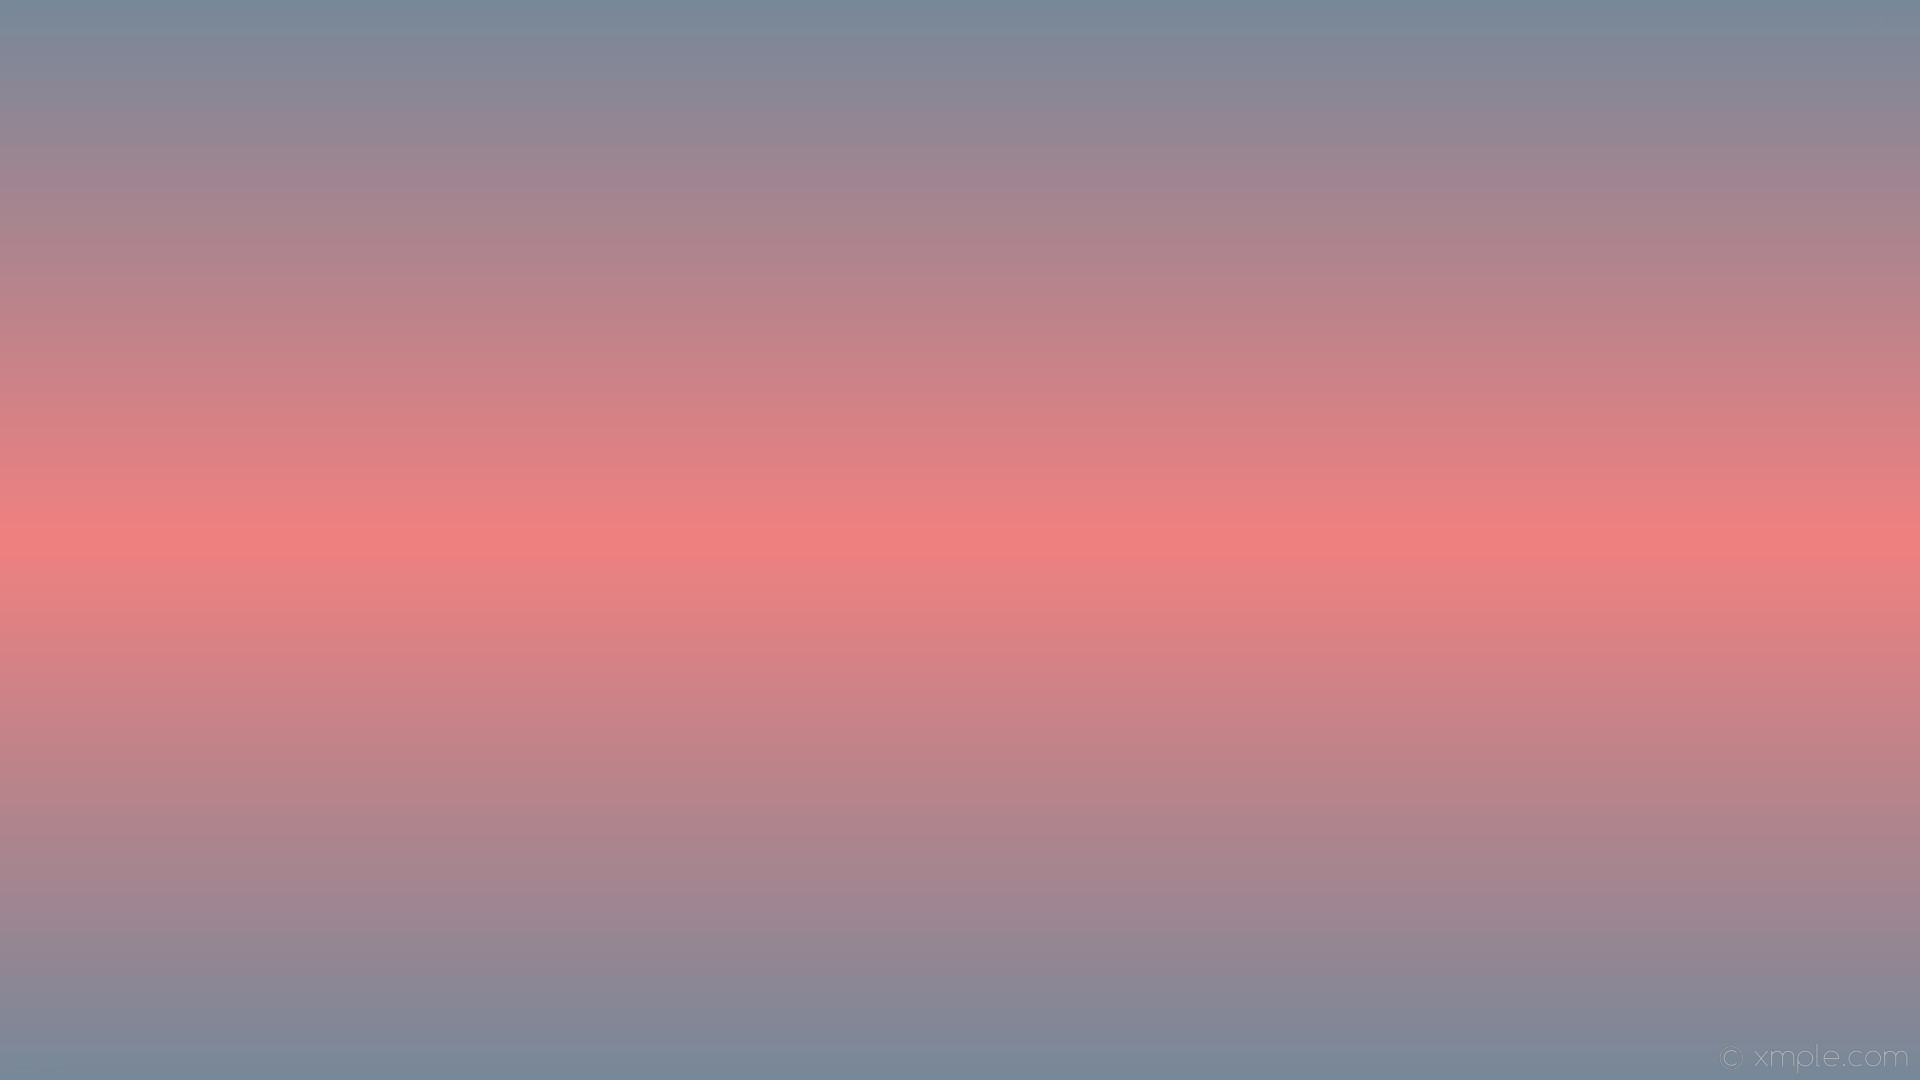 wallpaper linear gradient highlight red grey light slate gray light coral  #778899 #f08080 90